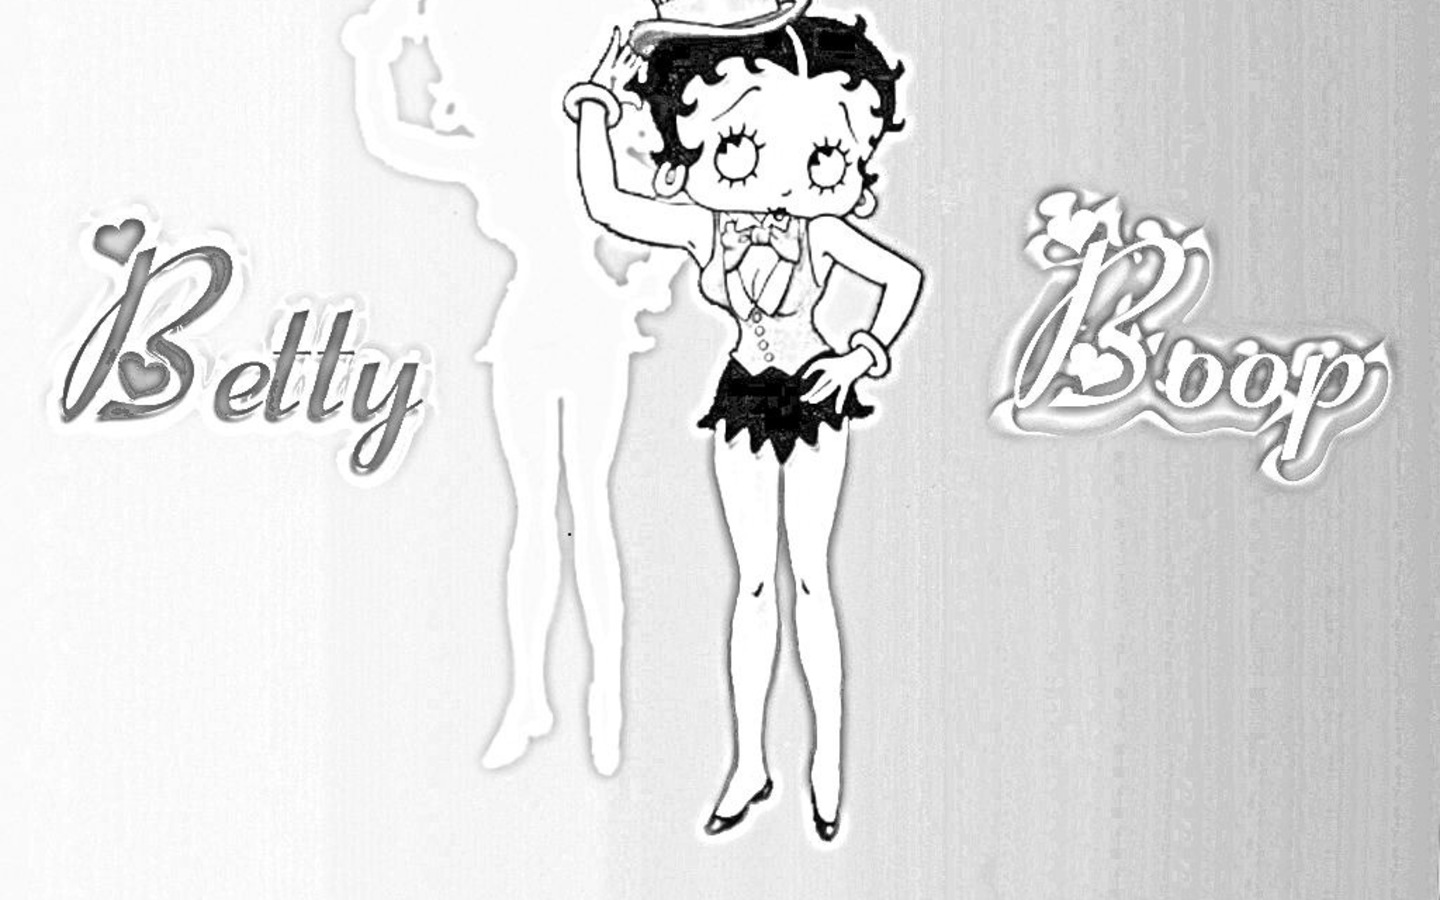 Betty Boop 壁紙画像 Pchdwallpaper Com Pchdwallpaper Com